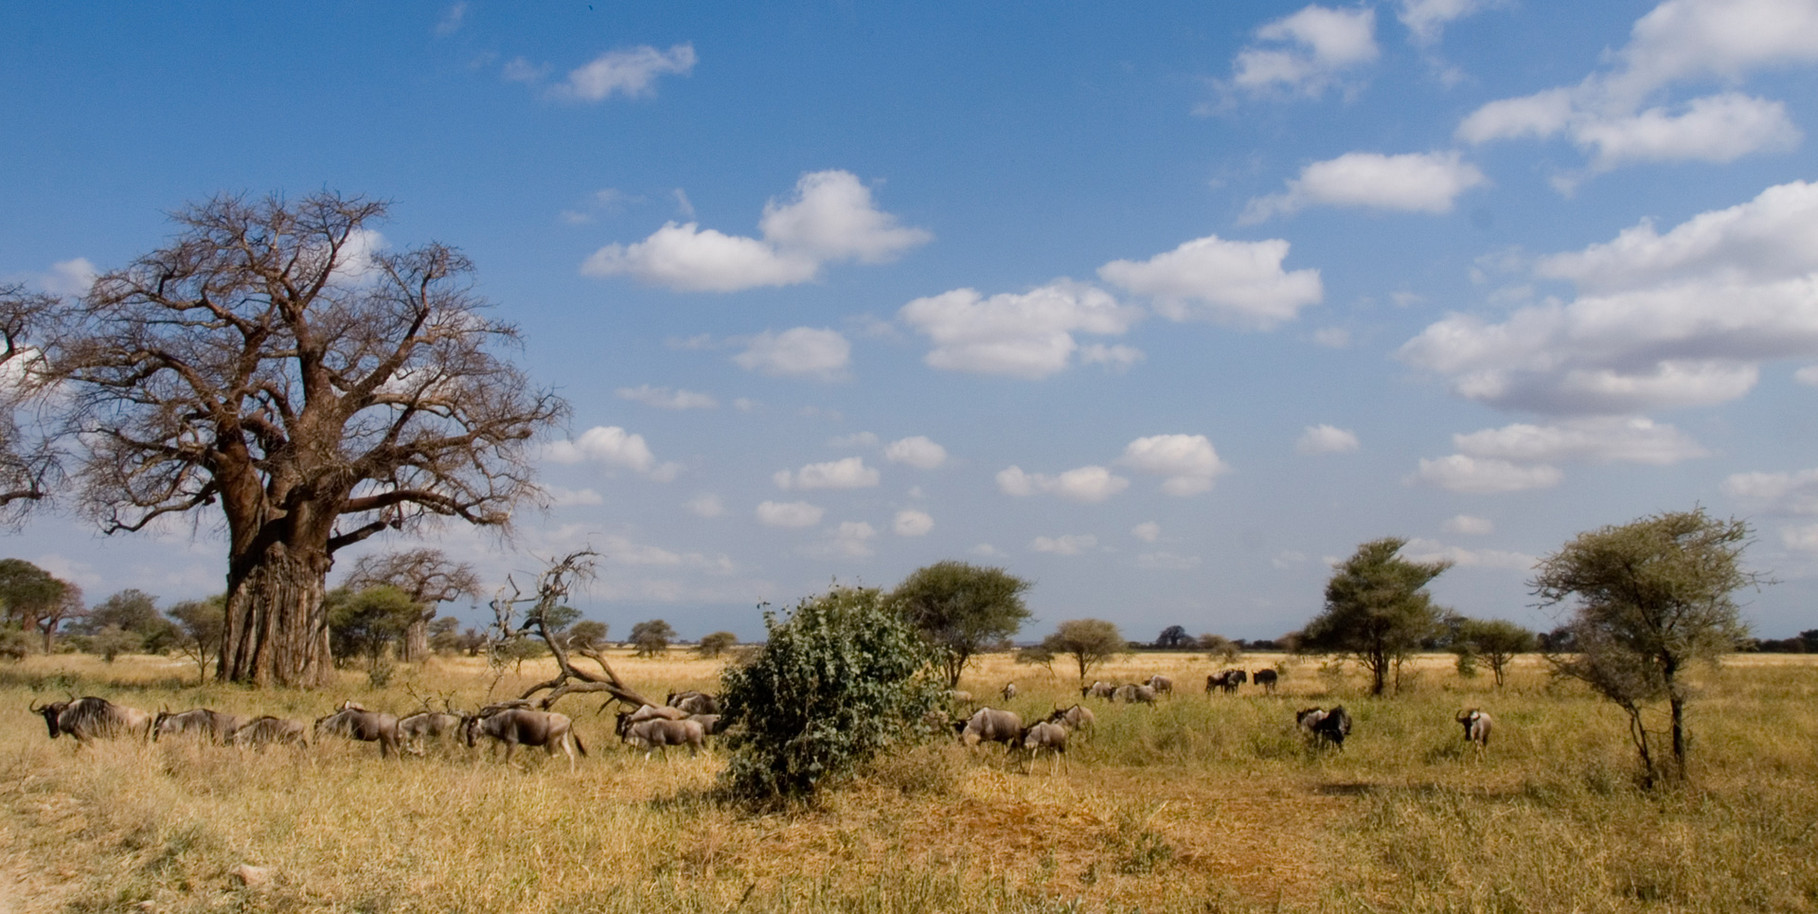 Ngorongoro during dry season, 2012